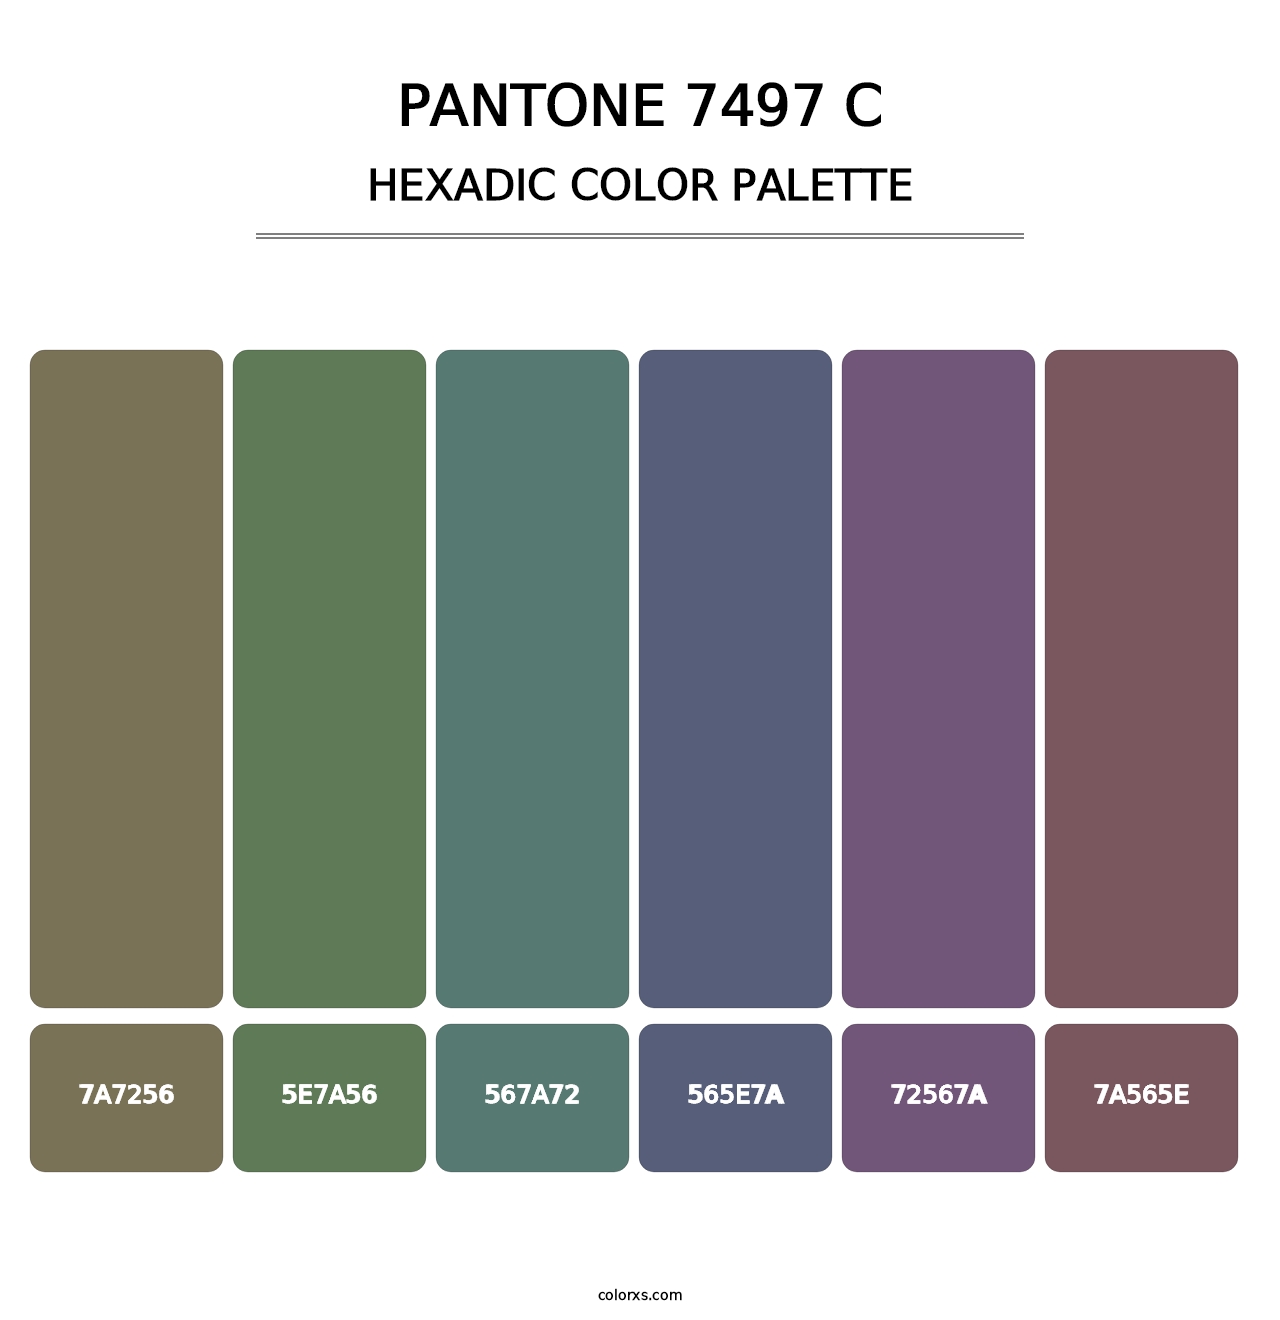 PANTONE 7497 C - Hexadic Color Palette